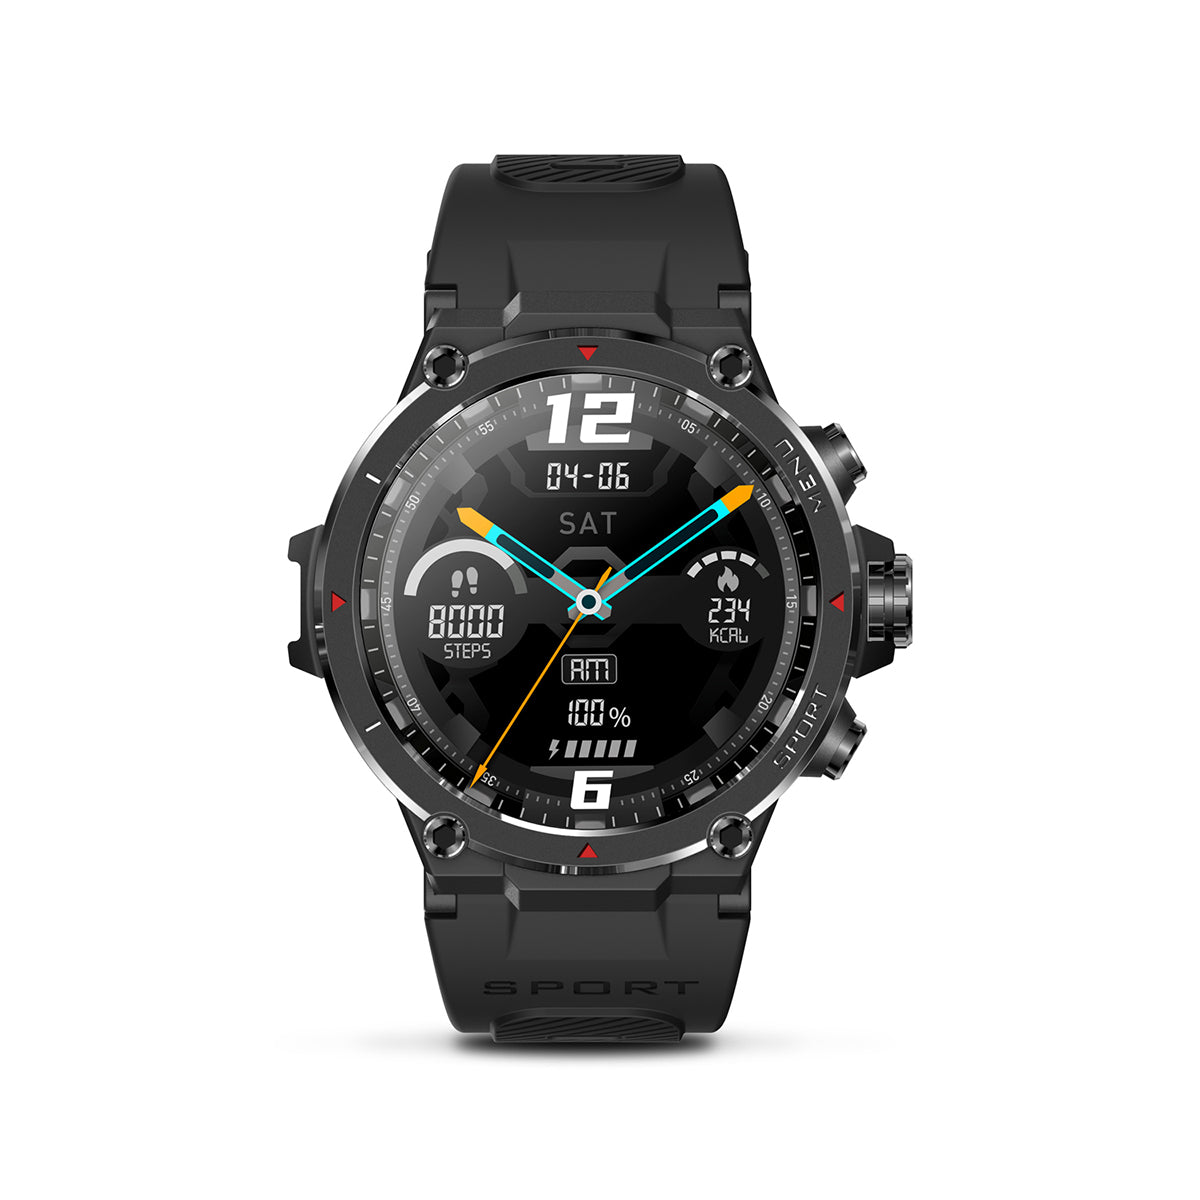 Veho Kuzo F1-S GPS Sports Smartwatch